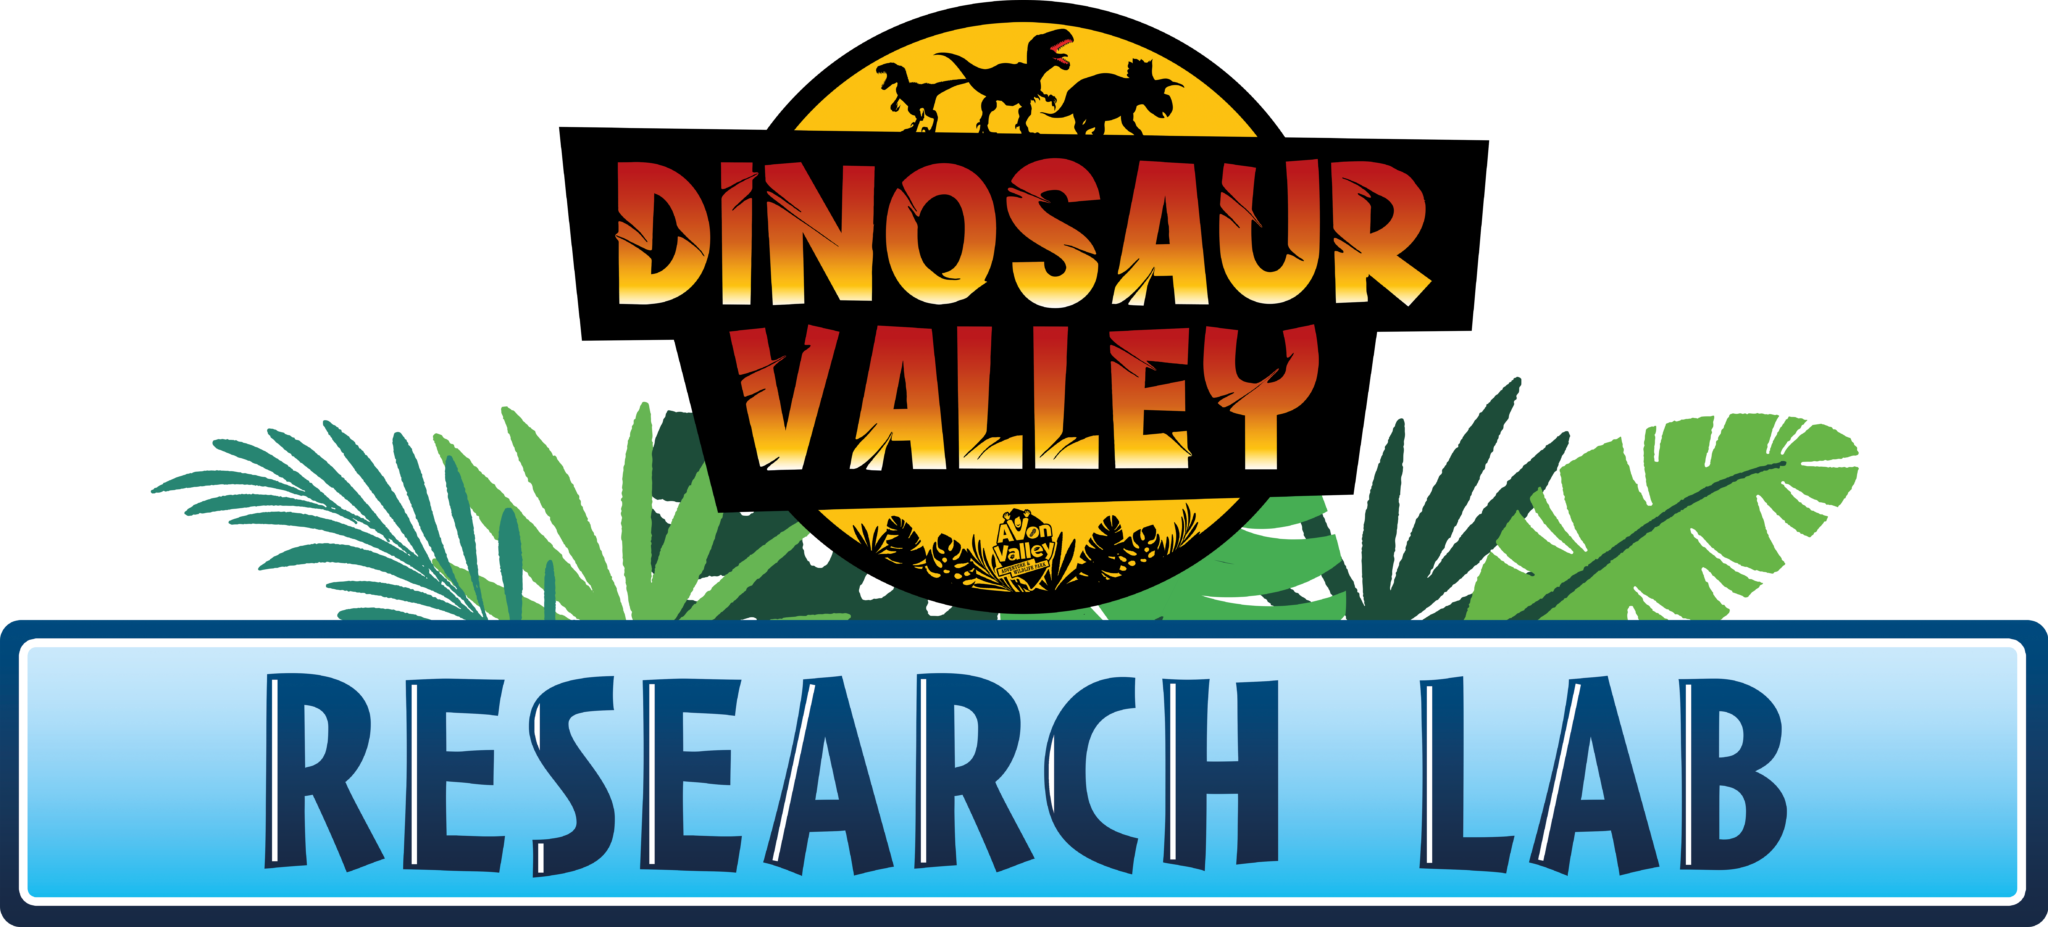 Dinosaur Valley LIVE Daily Activities Avon Valley